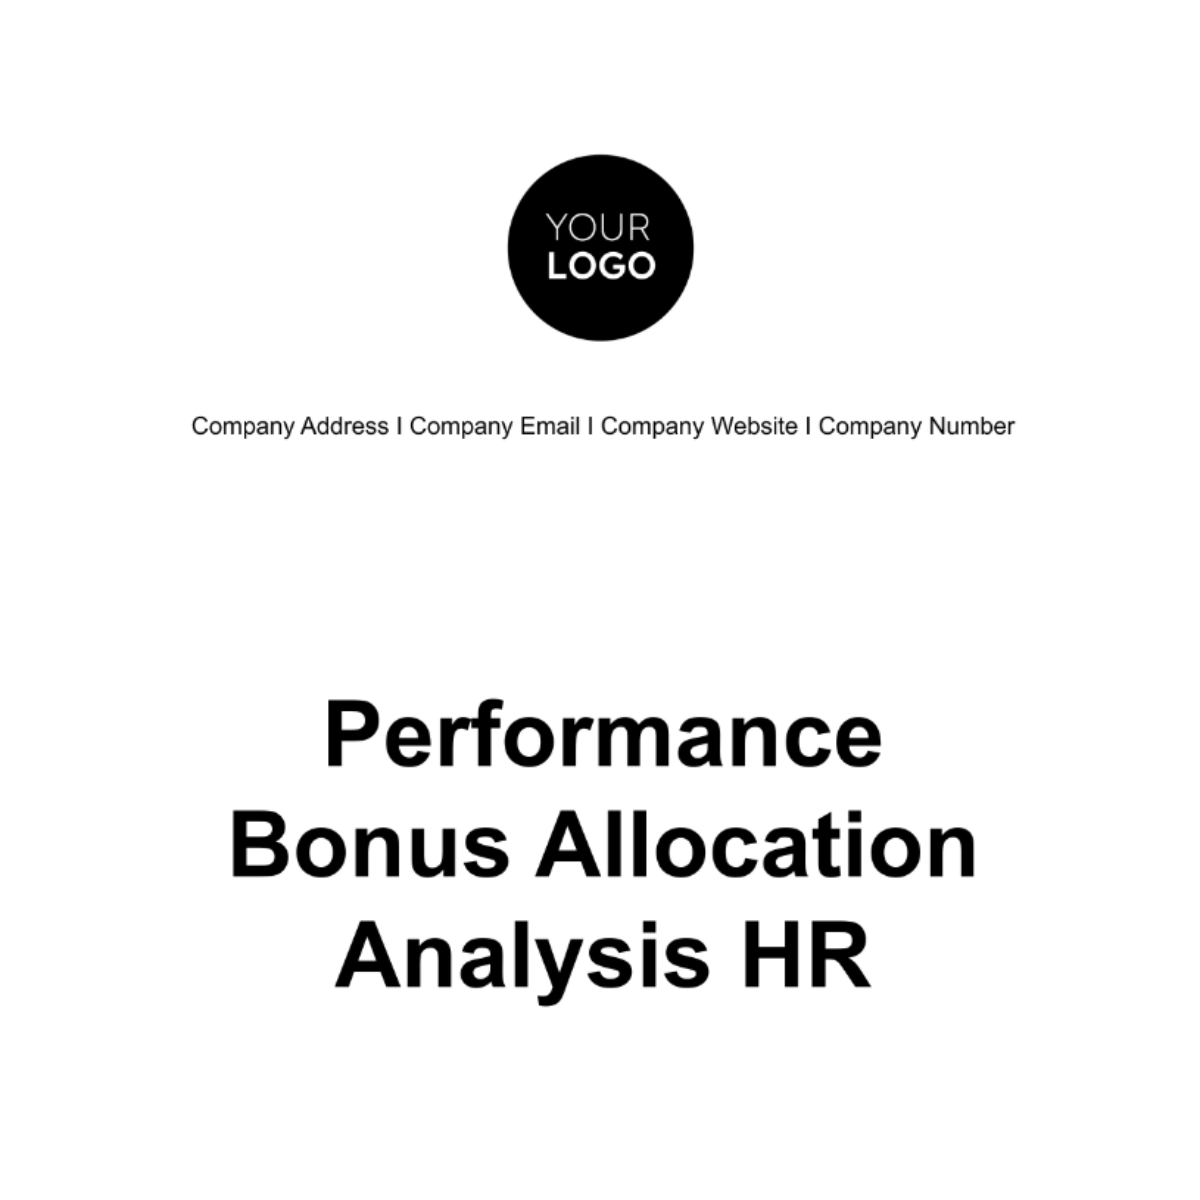 Performance Bonus Allocation Analysis HR Template